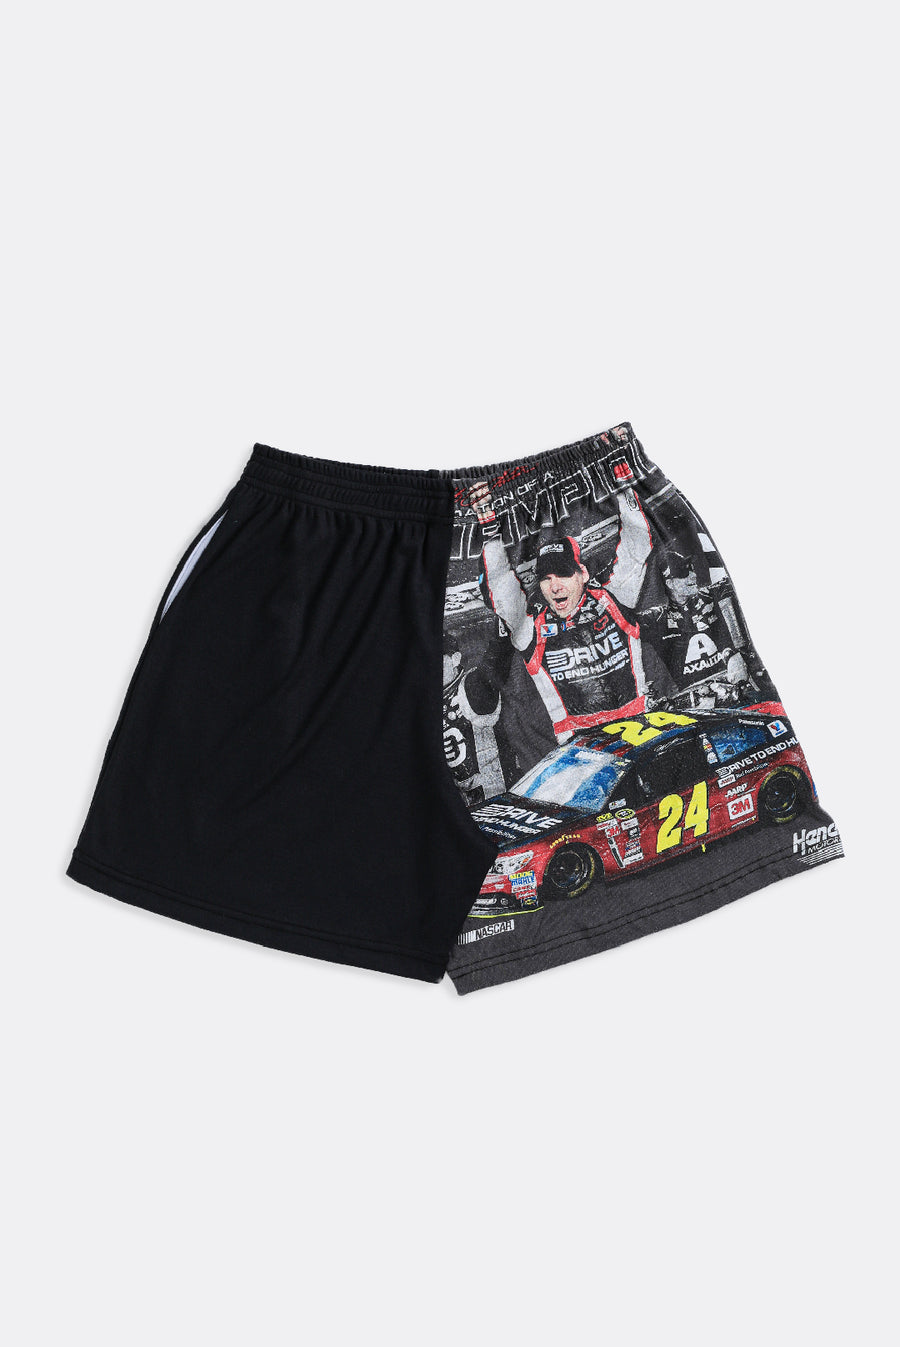 Unisex Rework Racing Tee Shorts - XS, S, M, L, XL